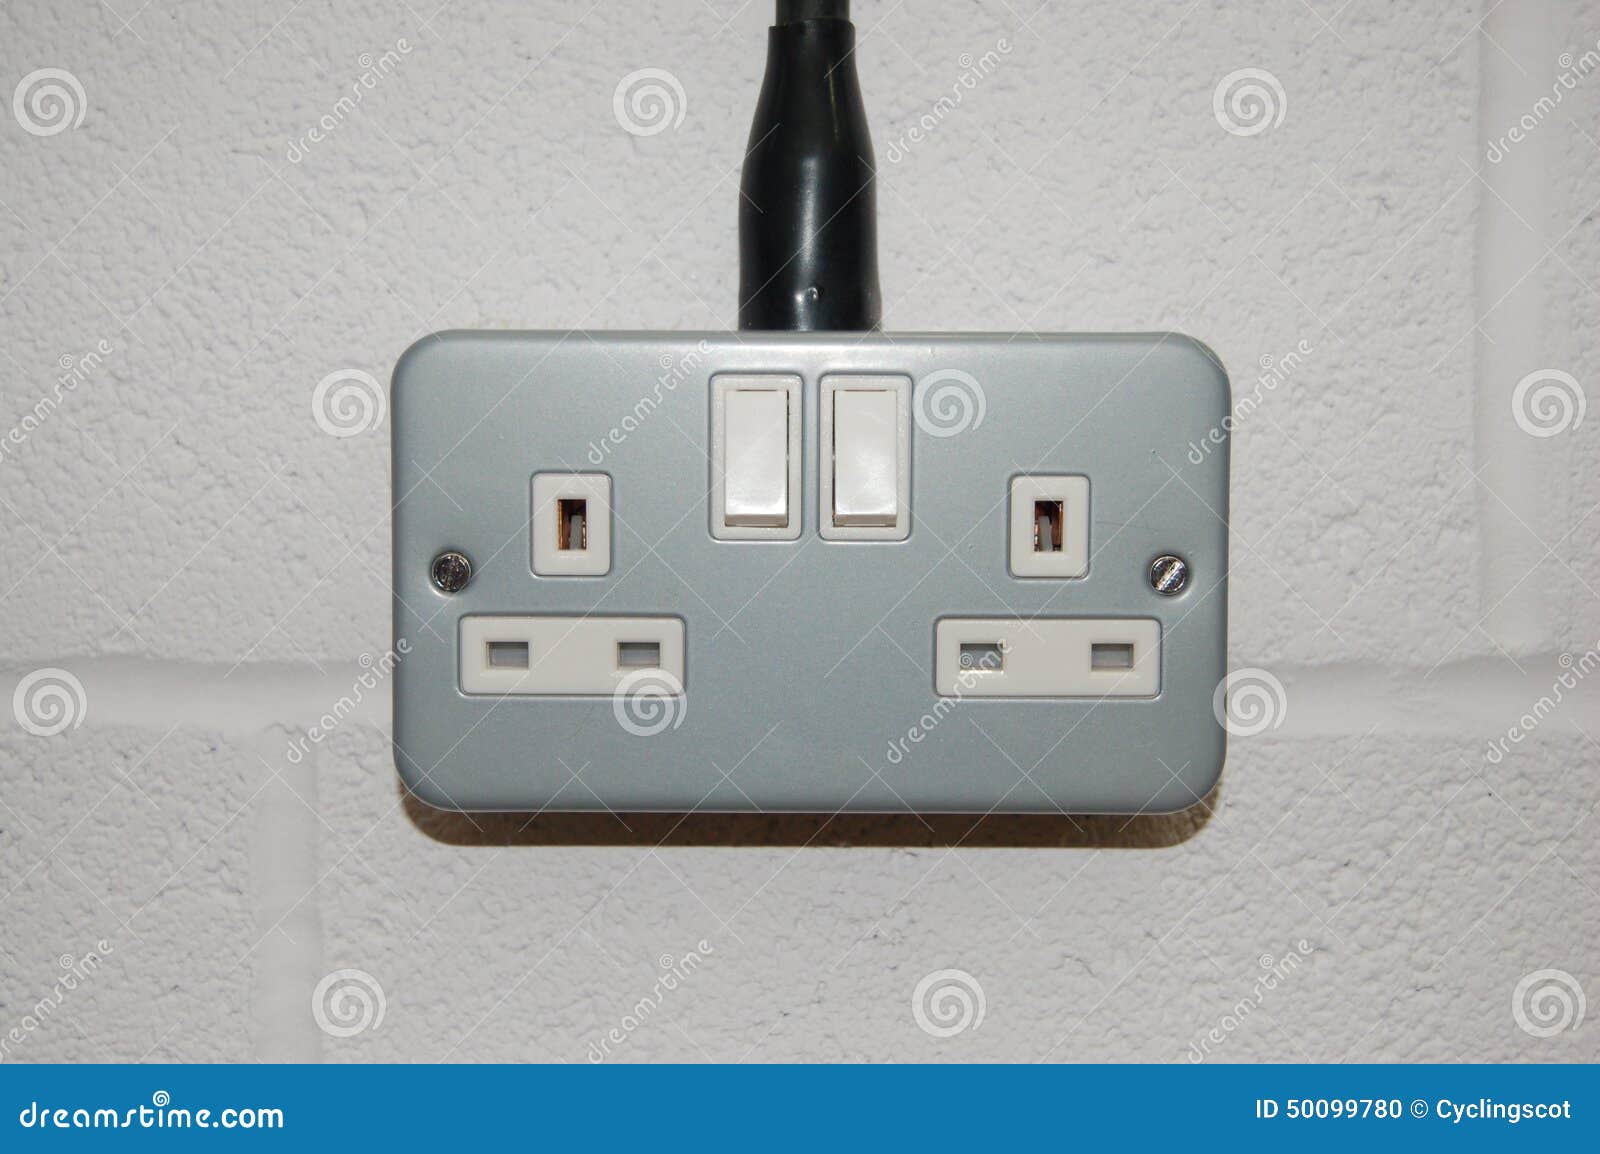 uk mains electrical socket, twin, metal industrial type